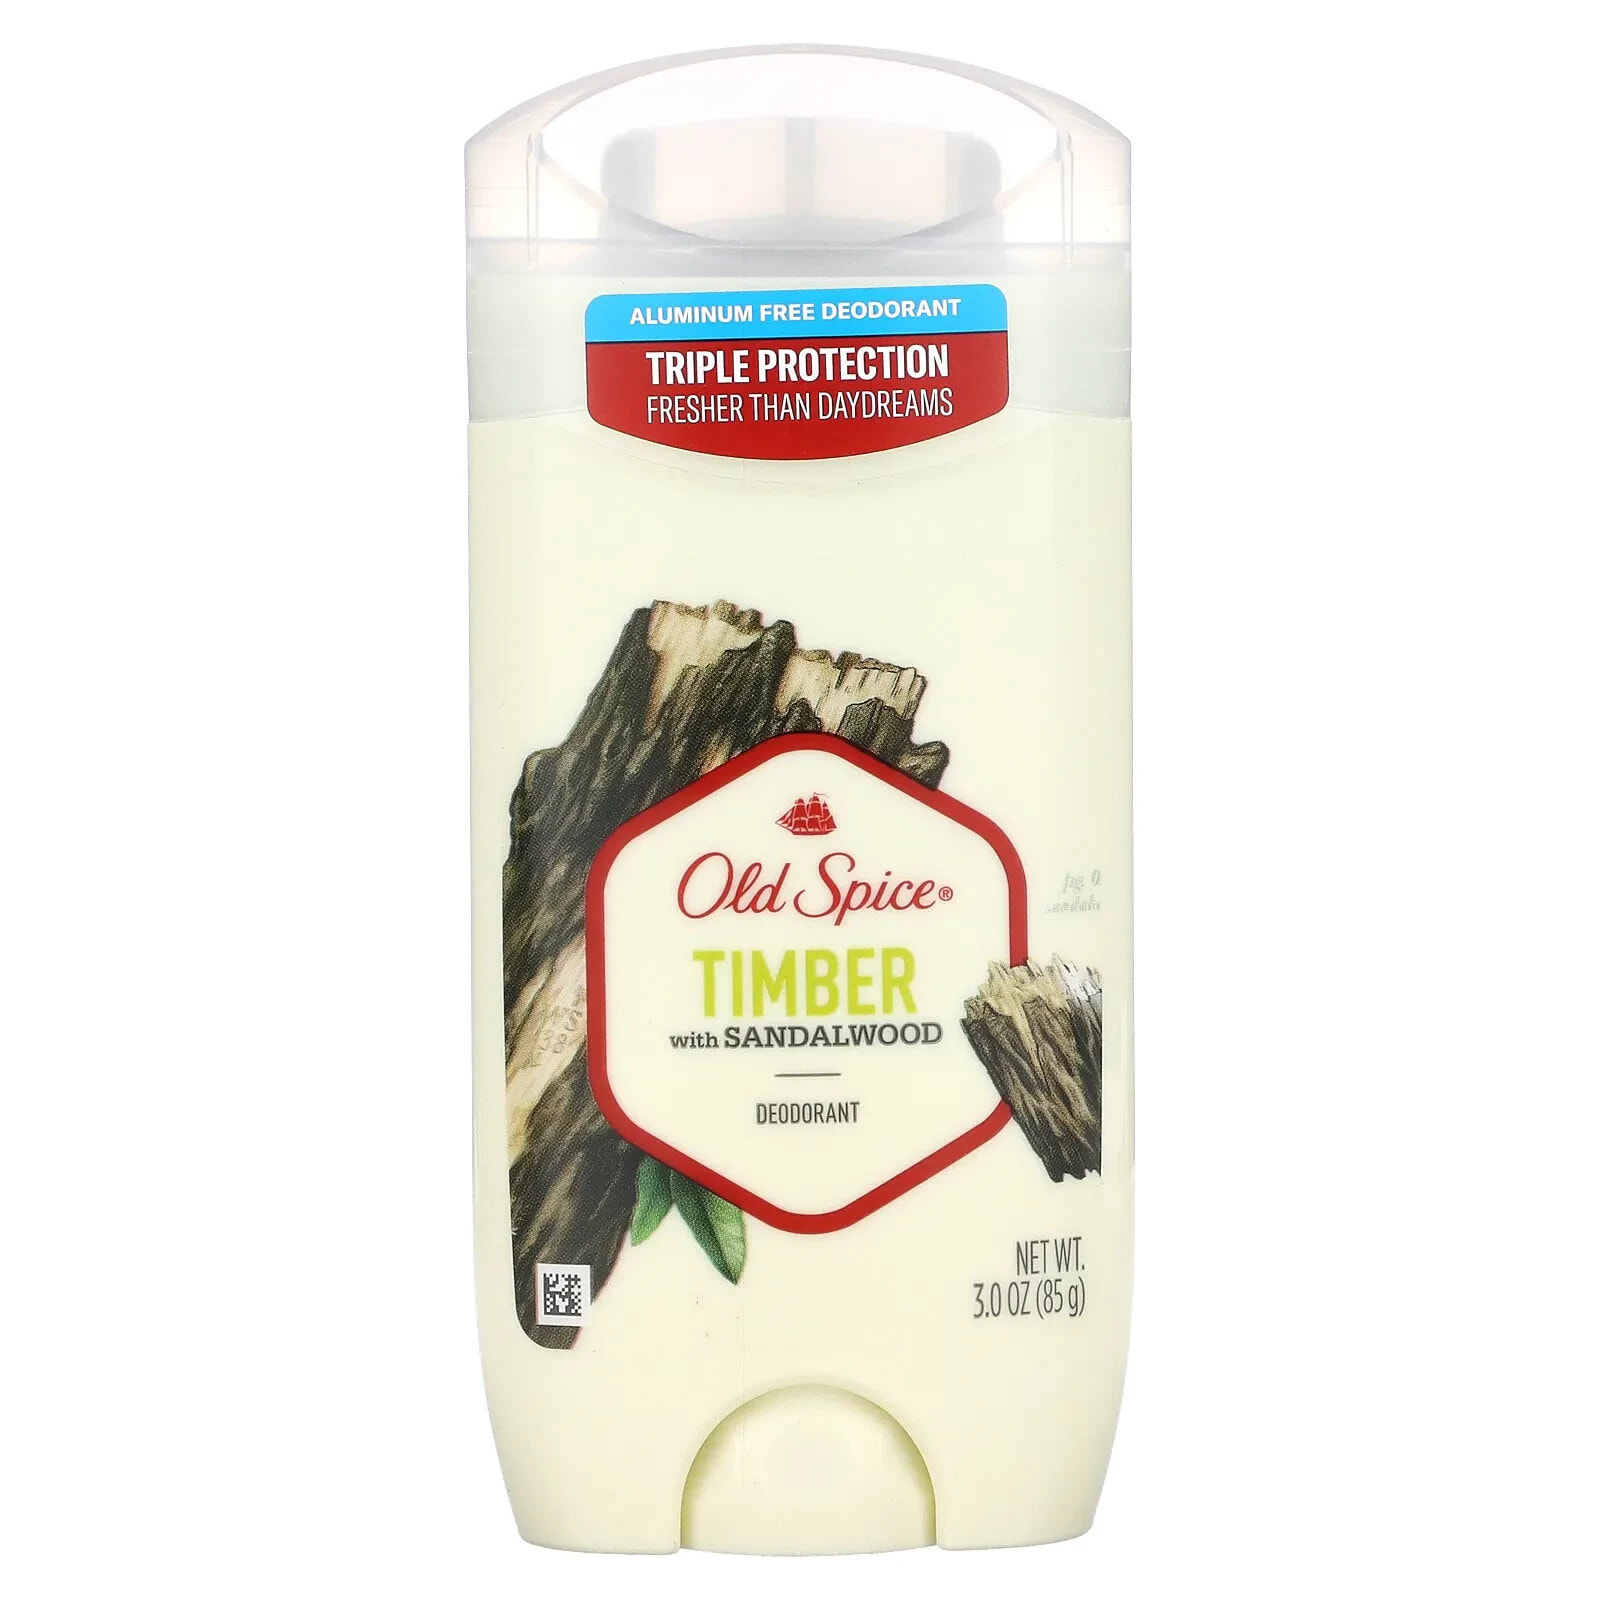 Deodorant, Timber with Sandalwood, 3 oz (85 g)